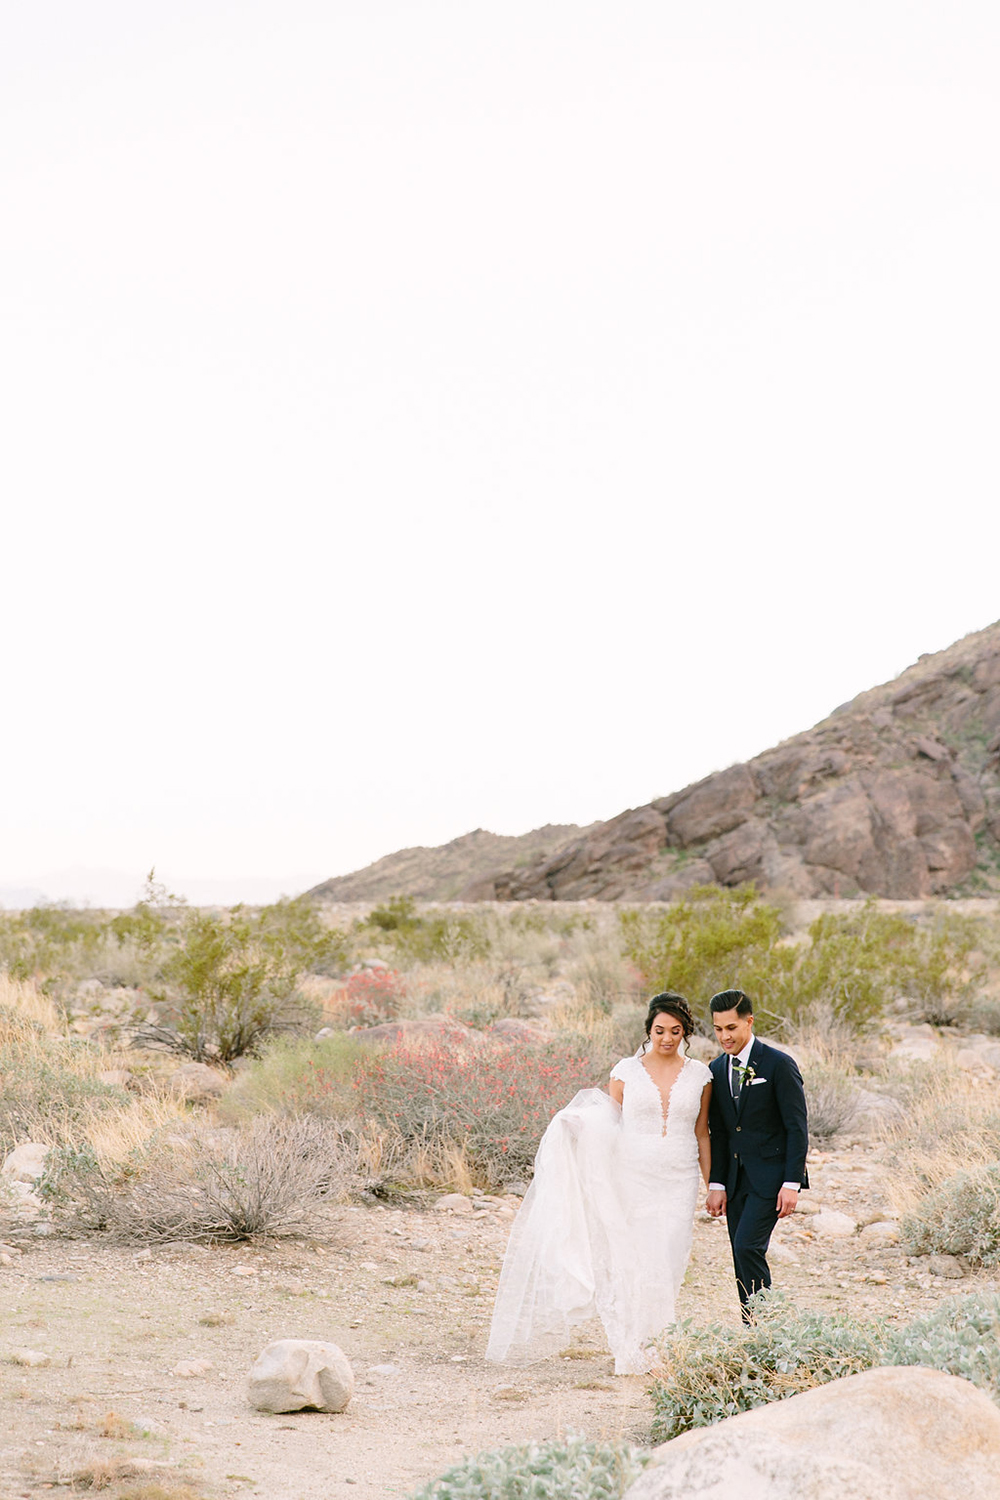 Bride and groom photos in desert